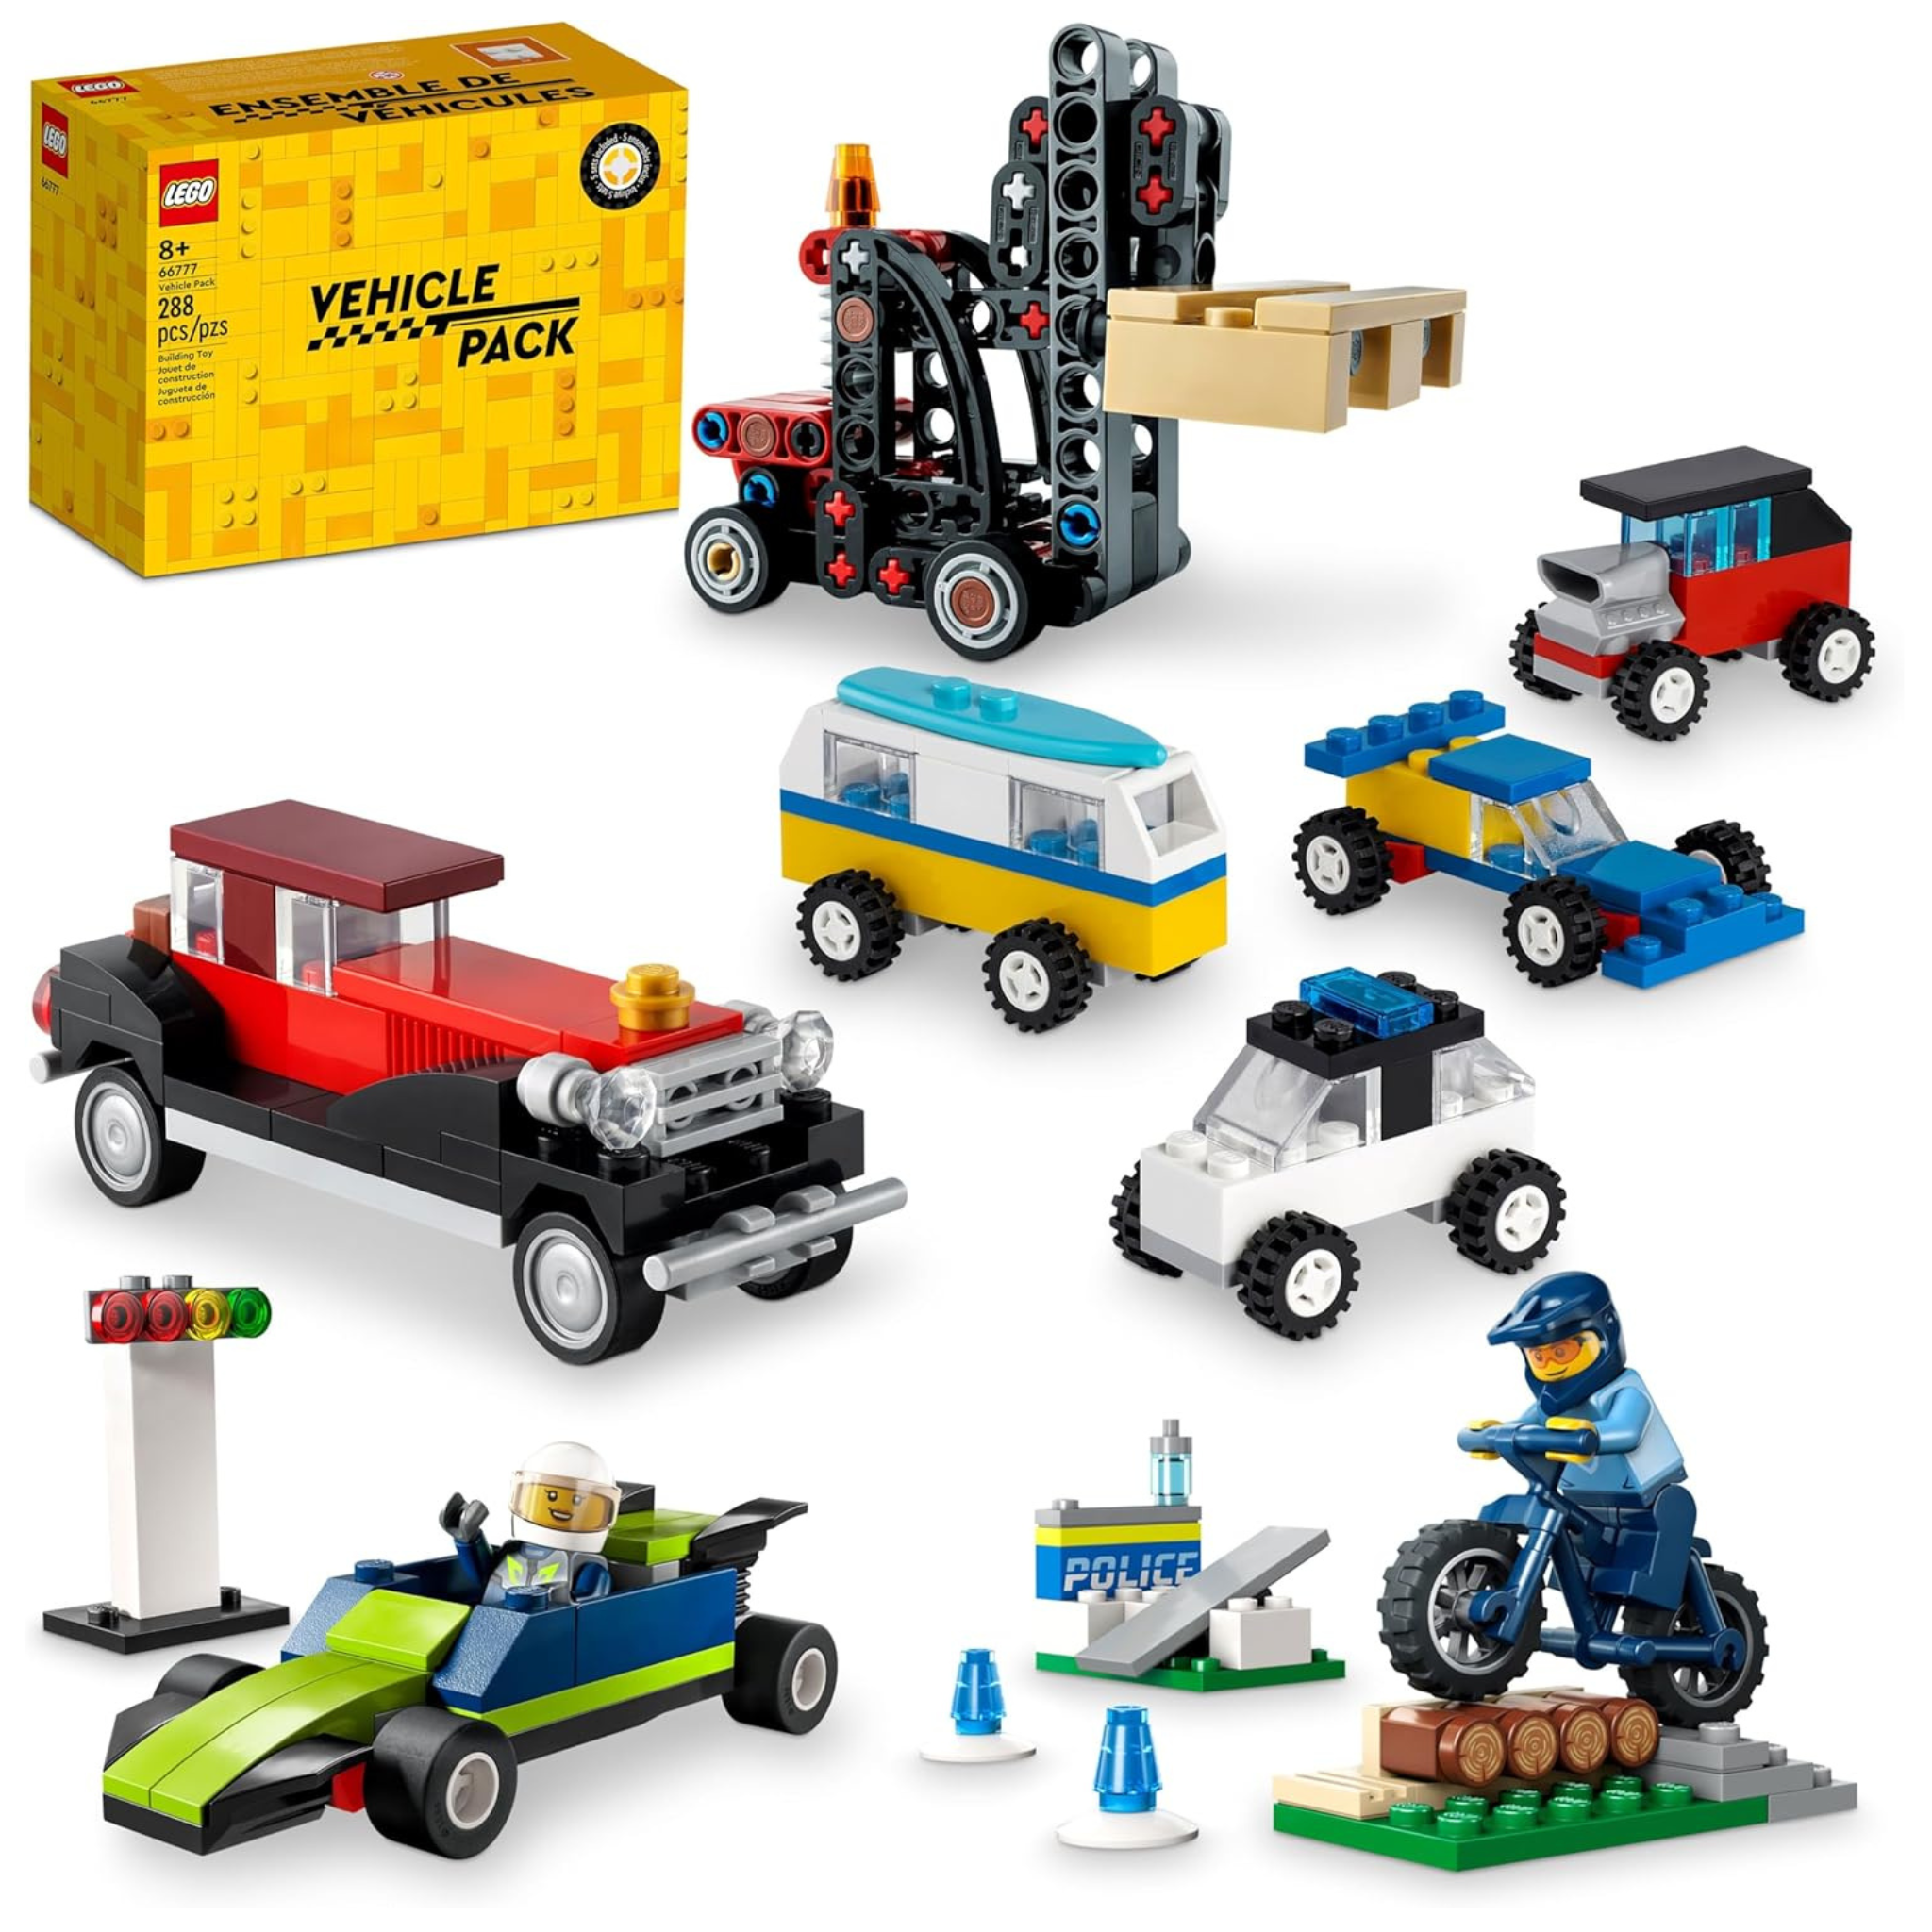 Lego Creator Vehicle Pack